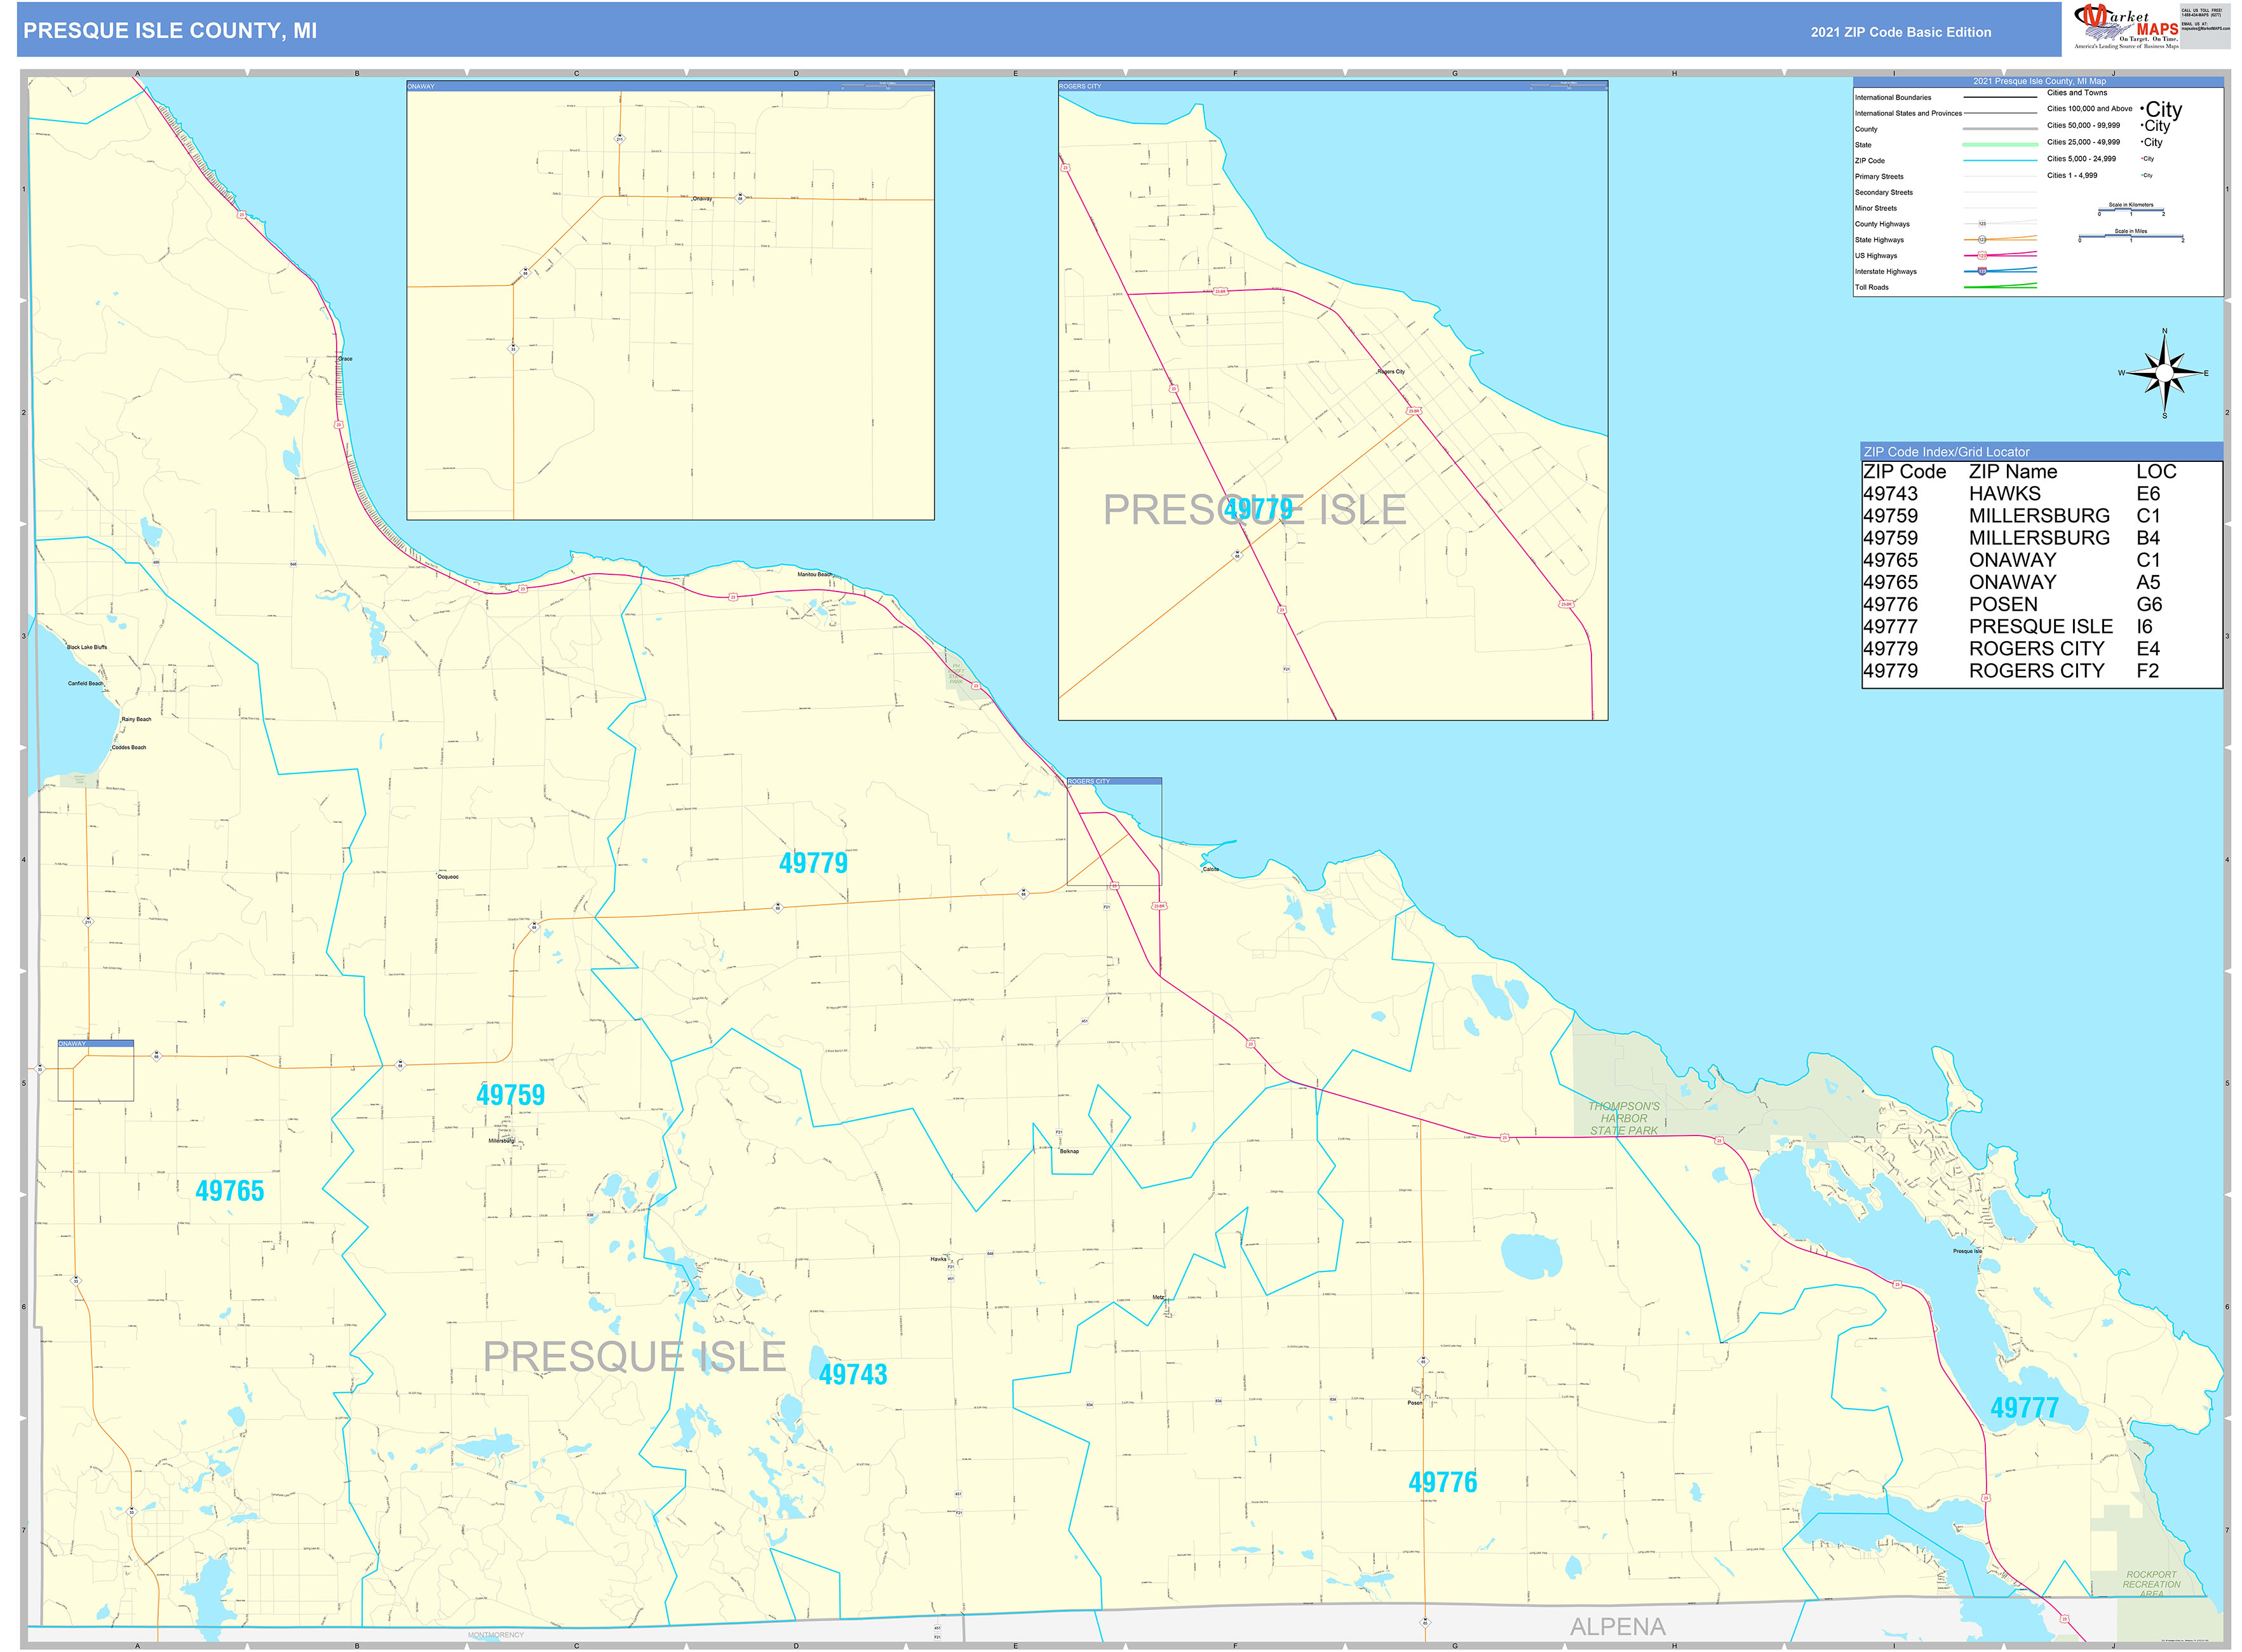 Presque Isle County, MI Zip Code Wall Map Basic Style by MarketMAPS